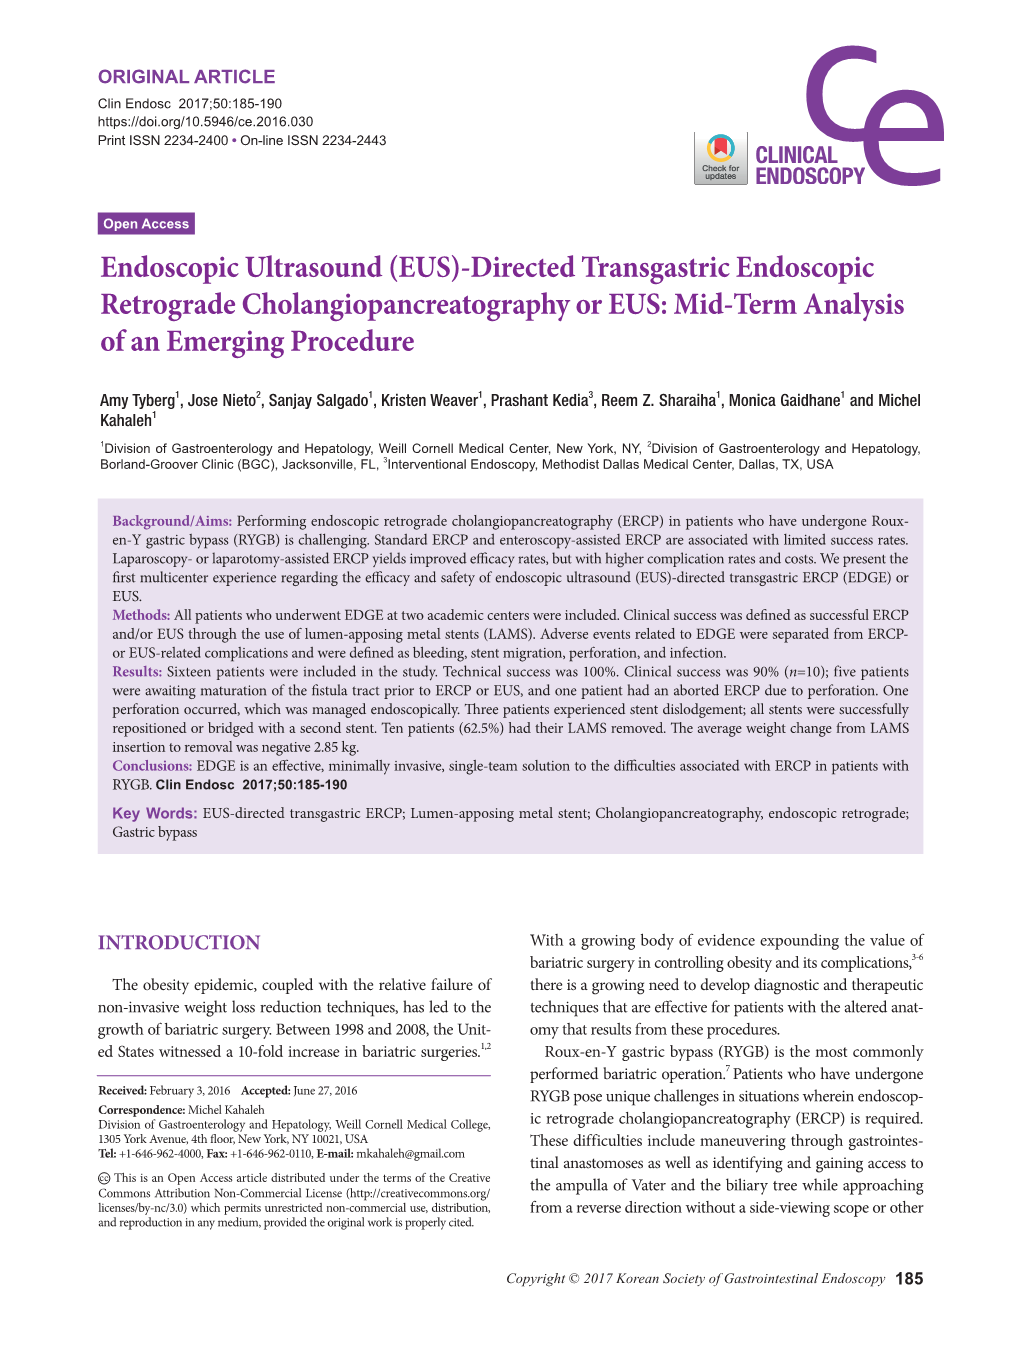 Endoscopic Ultrasound (EUS)-Directed Transgastric Endoscopic Retrograde Cholangiopancreatography Or EUS: Mid-Term Analysis of an Emerging Procedure